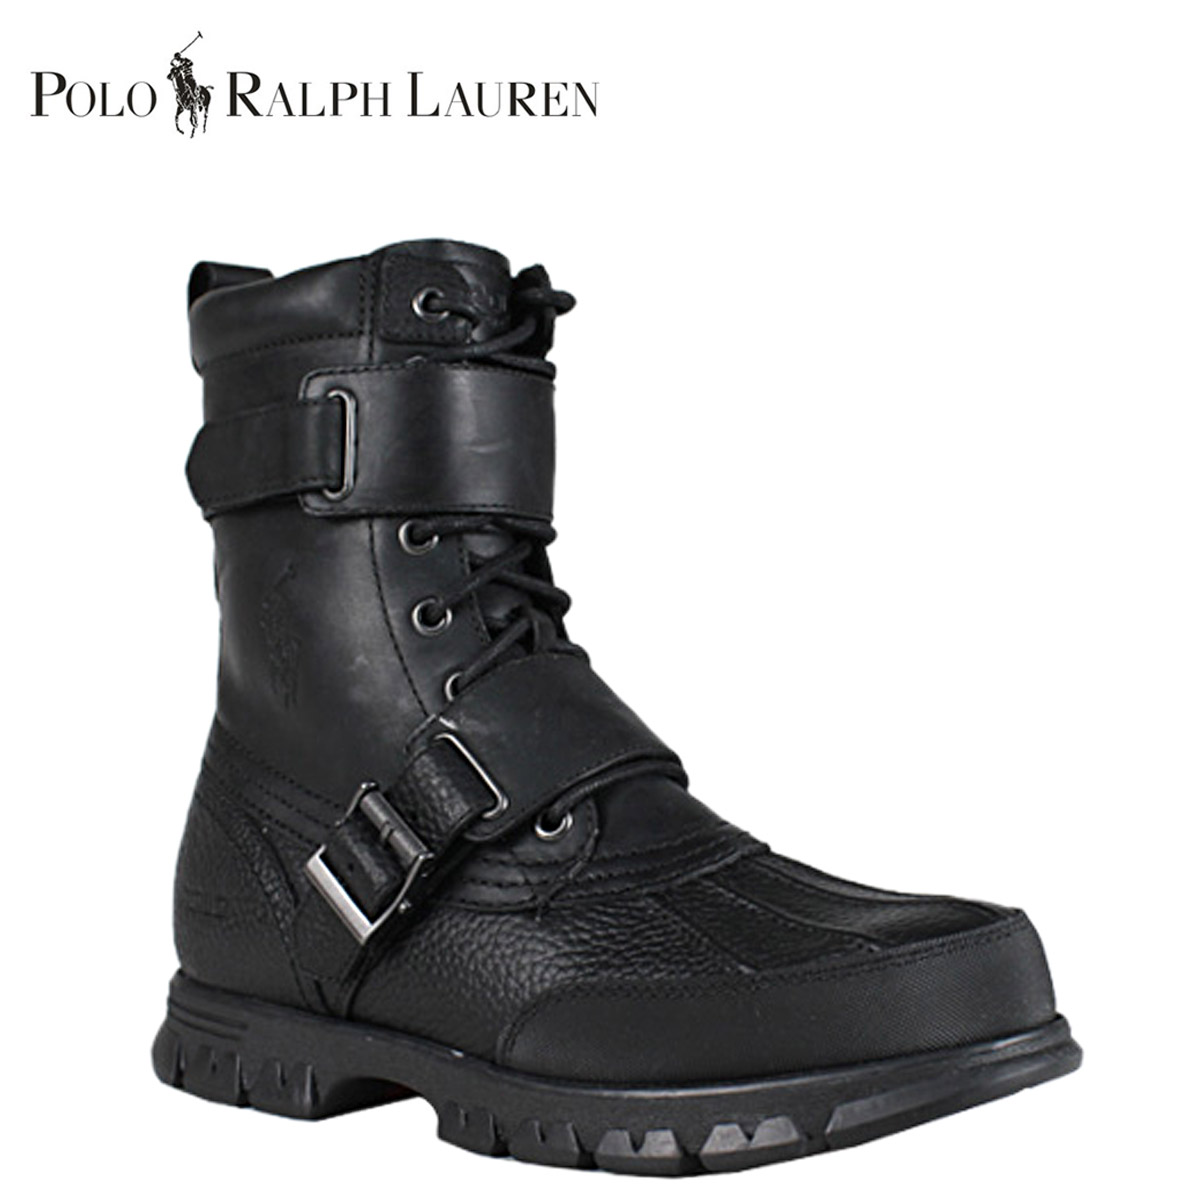 ralph lauren boots on sale - 50% OFF 